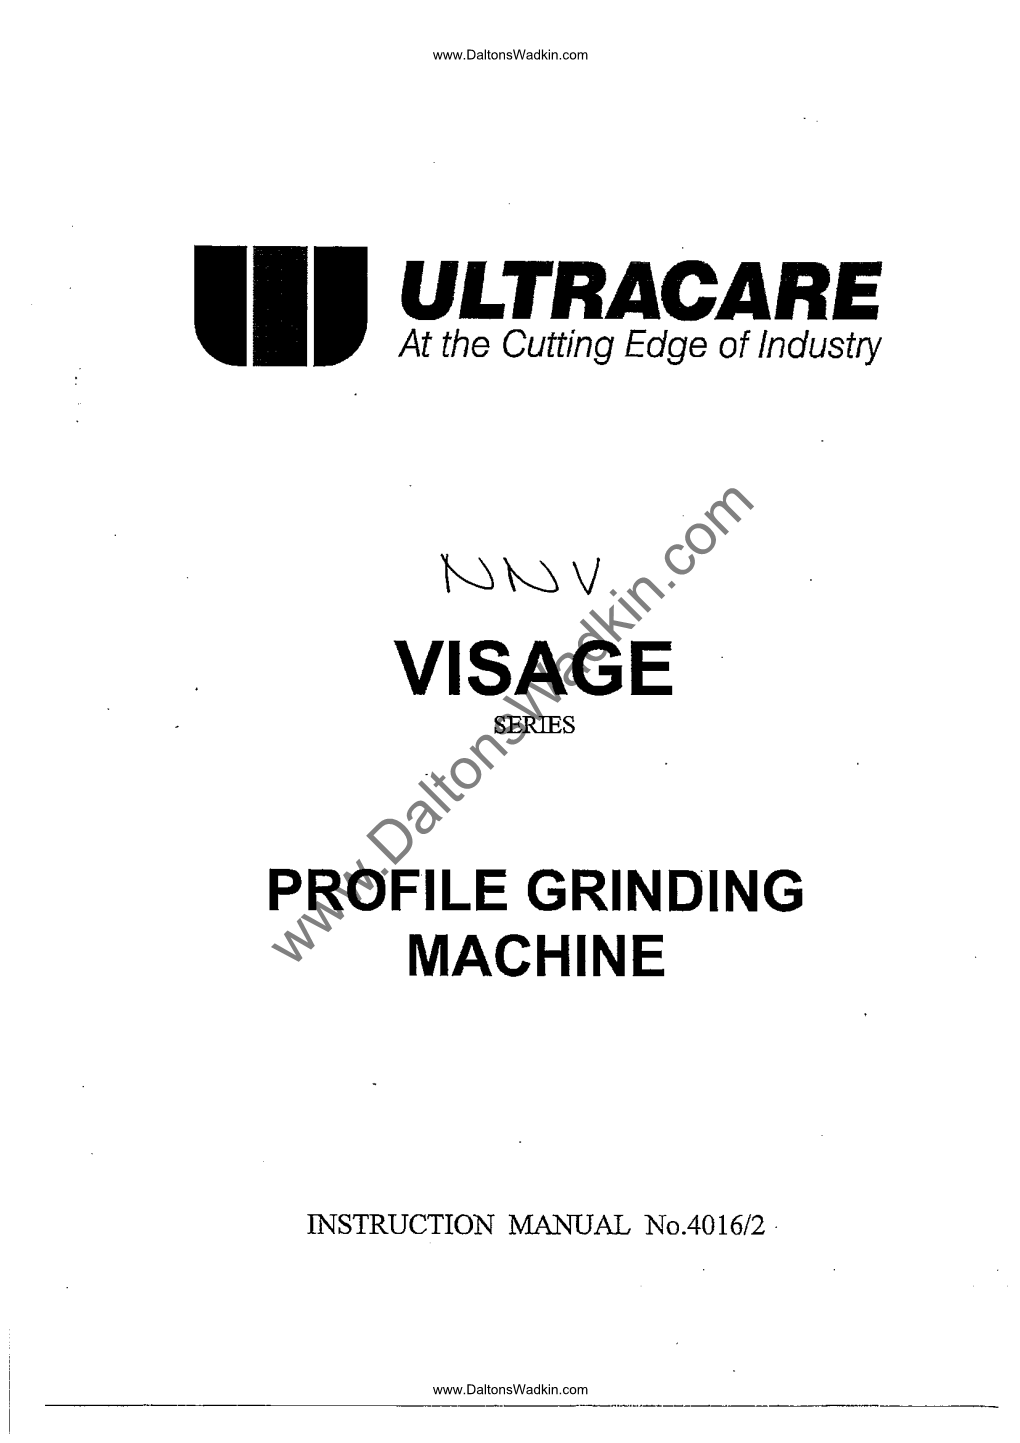 Wadkin NNV Visage Grinder Manual & Parts List